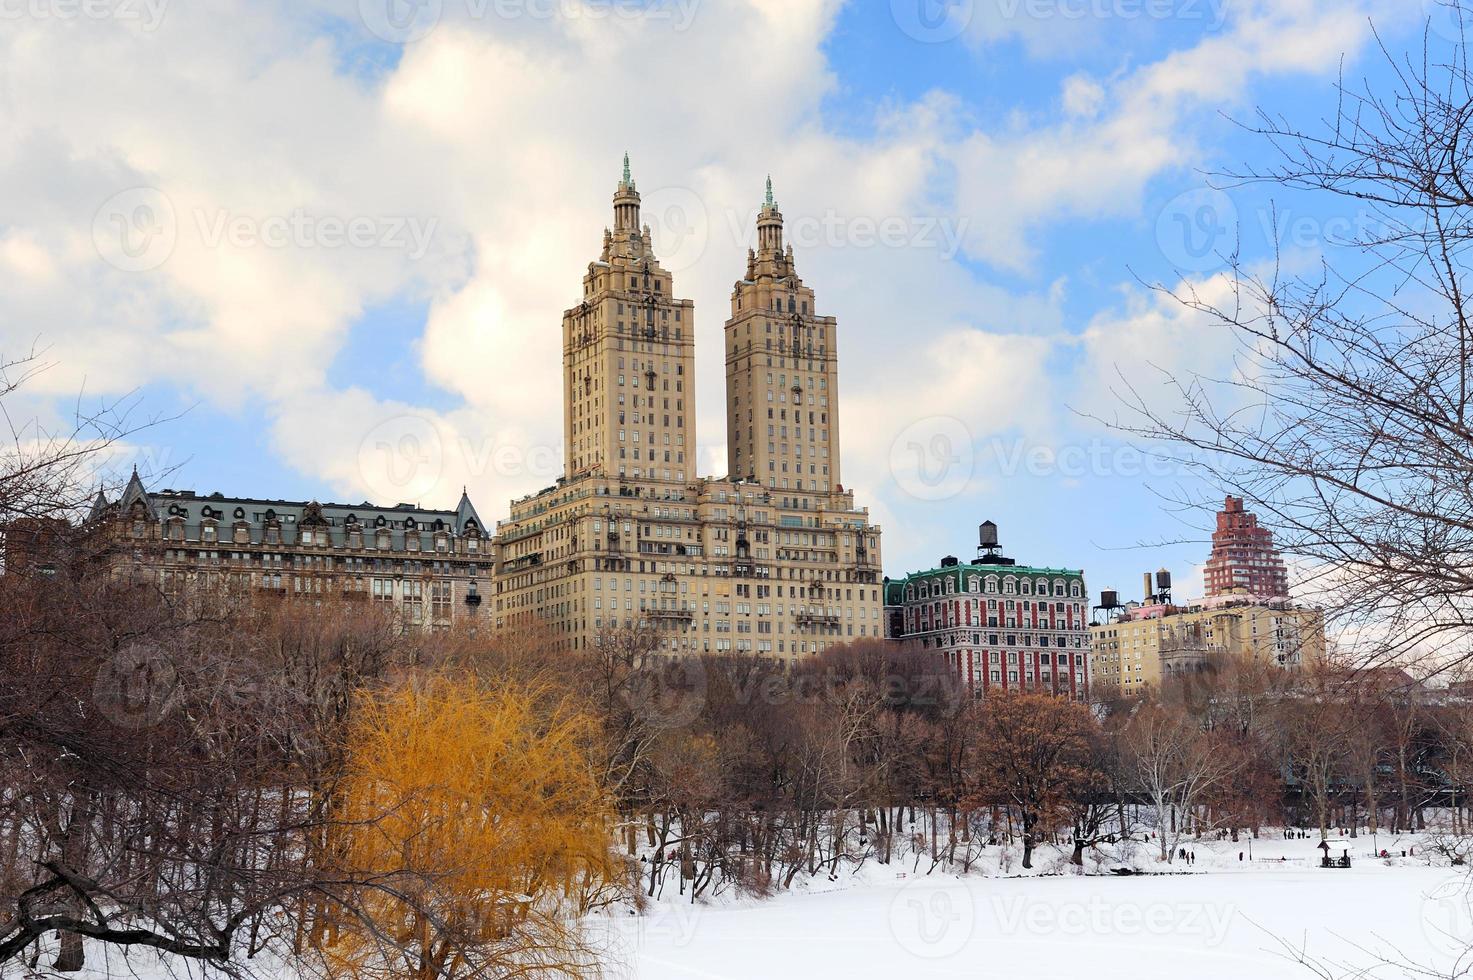 New York City Manhattan Central Park in winter photo